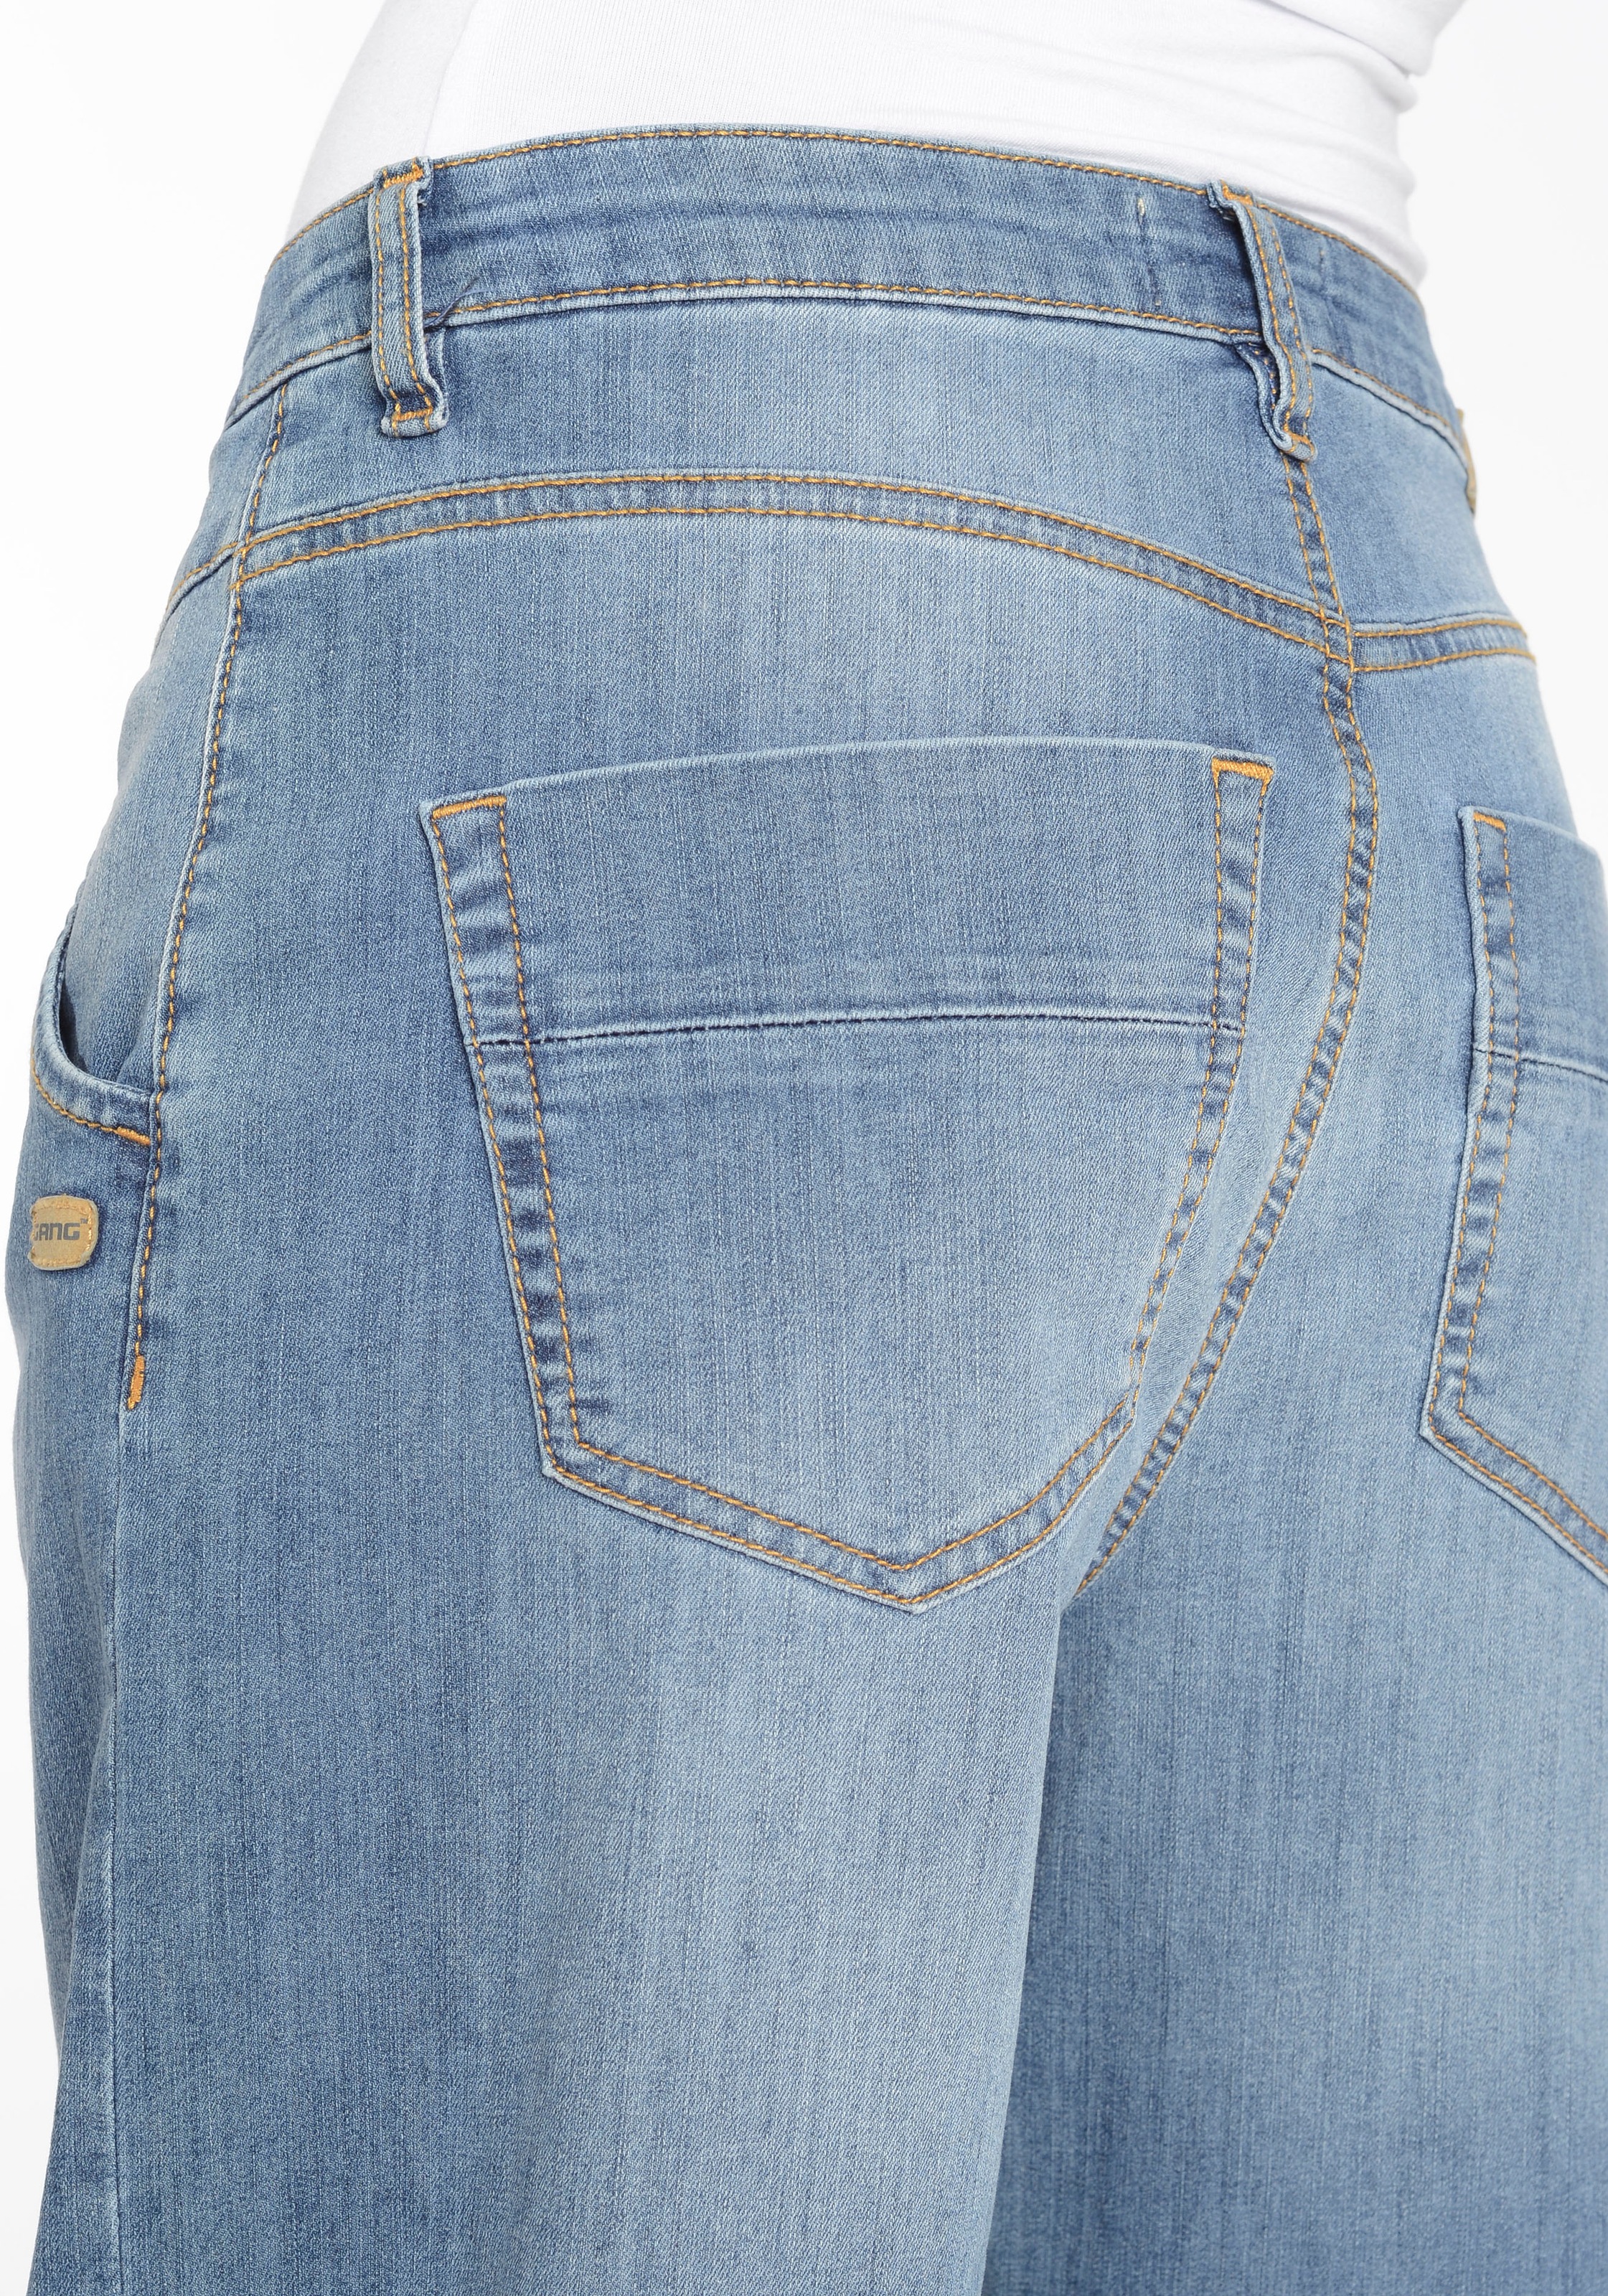 ♕ GANG Bequeme Jeans »94SILVIA«, Ballon Fit in cooler Used Waschung  versandkostenfrei kaufen